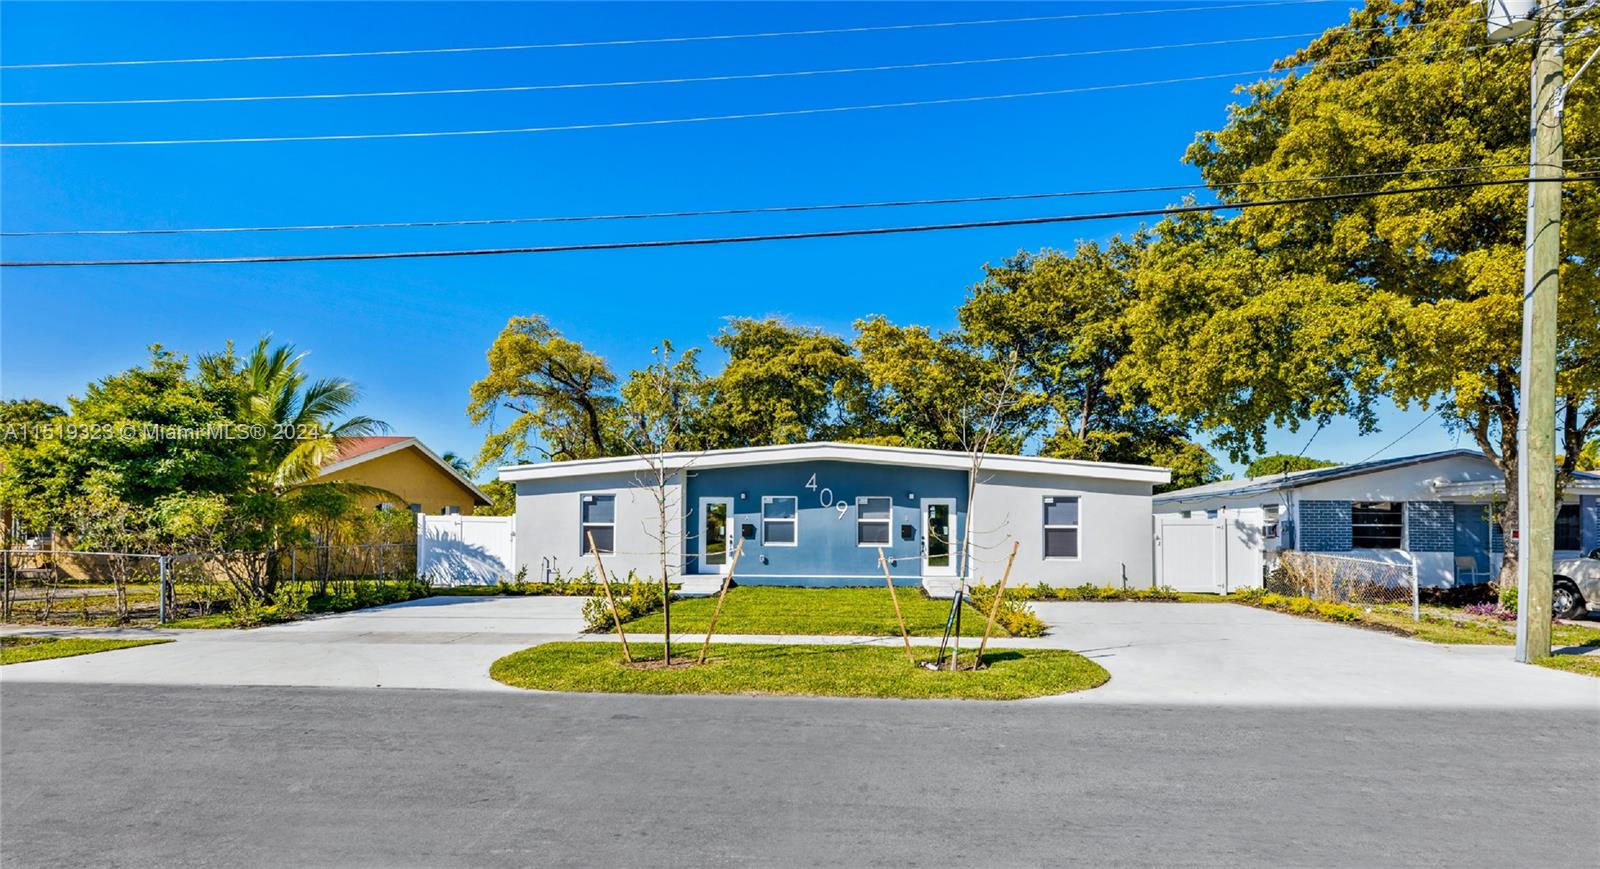 Rental Property at 409 Nw 4th Ave, Hallandale Beach, Broward County, Florida -  - $949,997 MO.